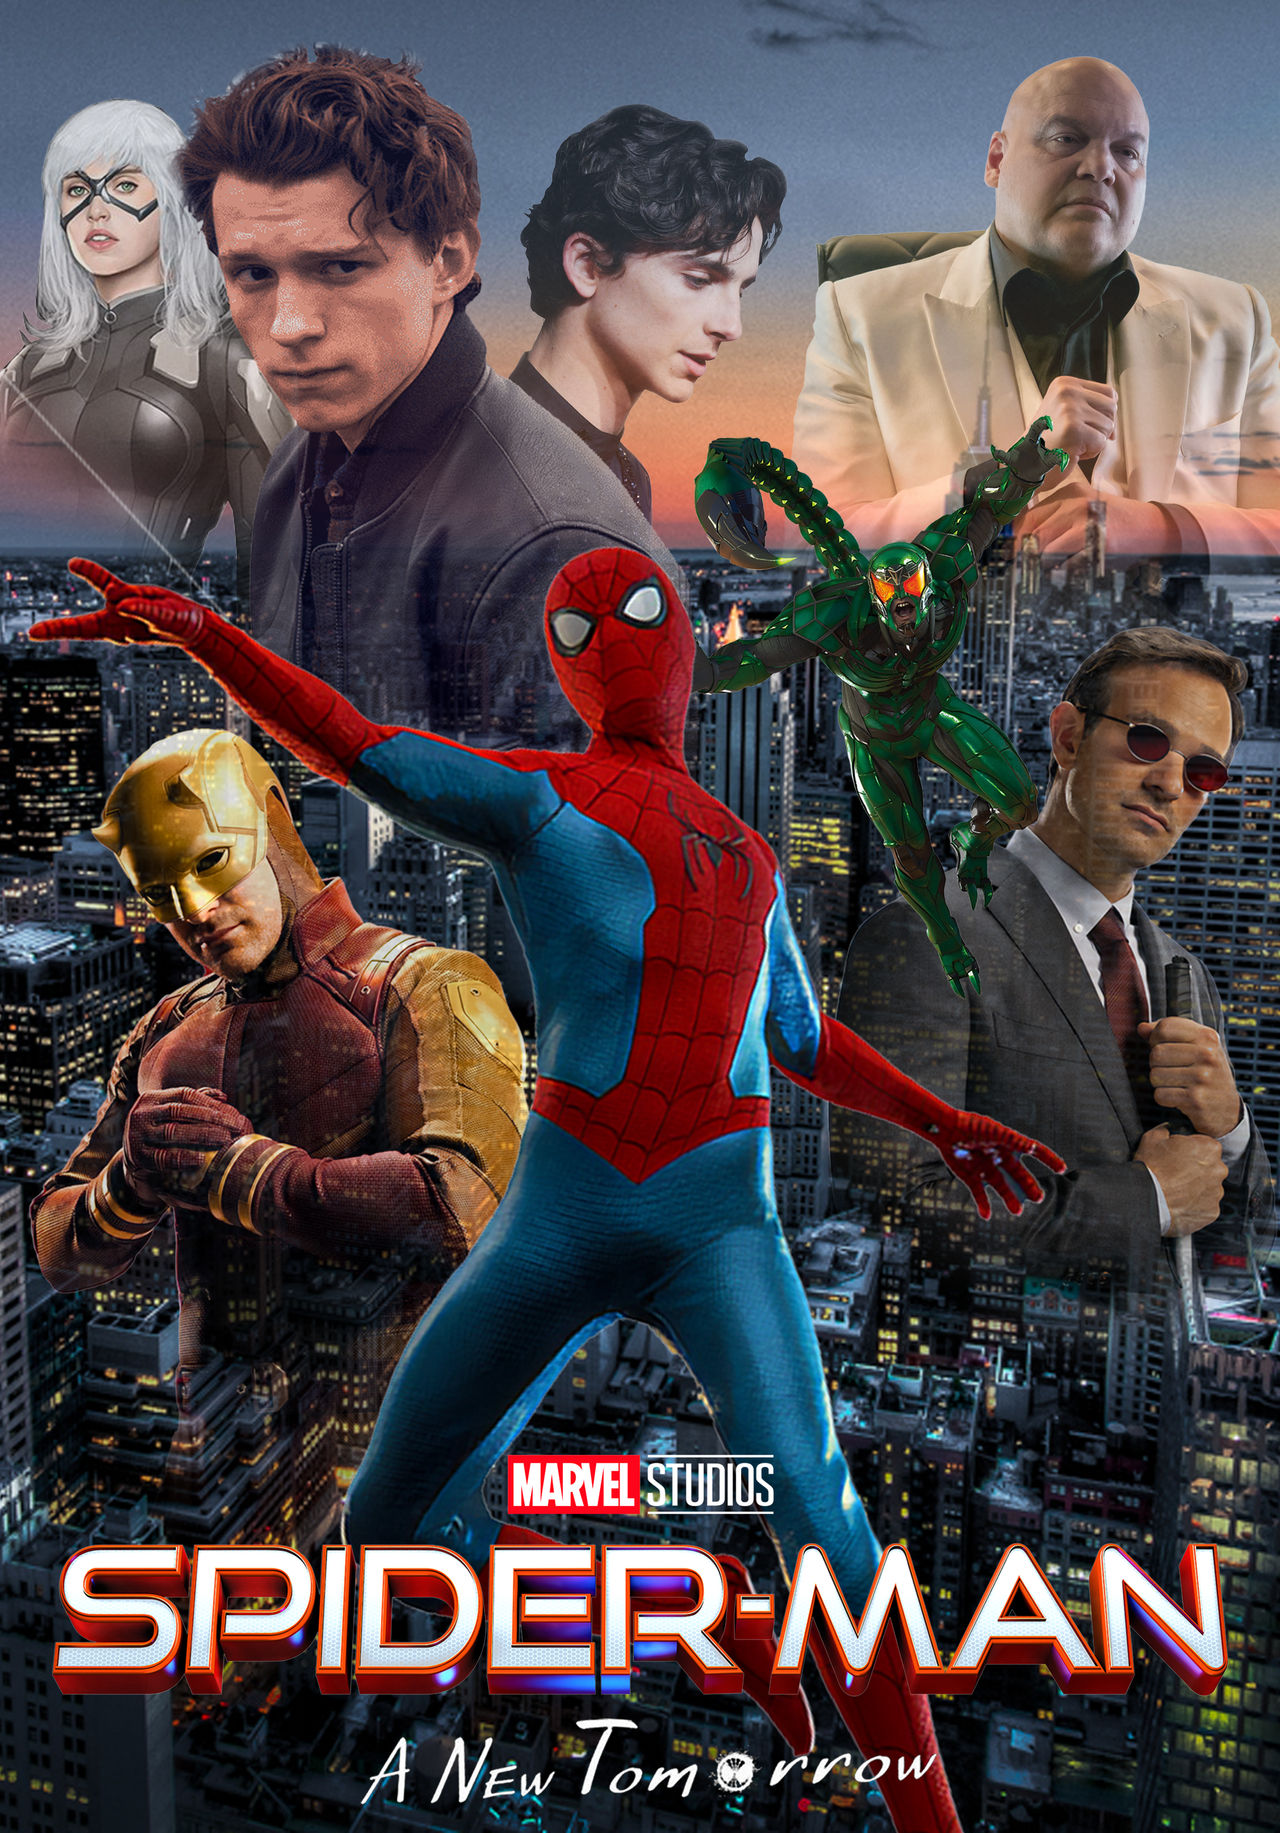 MCU Spider-Man: Web of Shadows by thespiderfan on DeviantArt